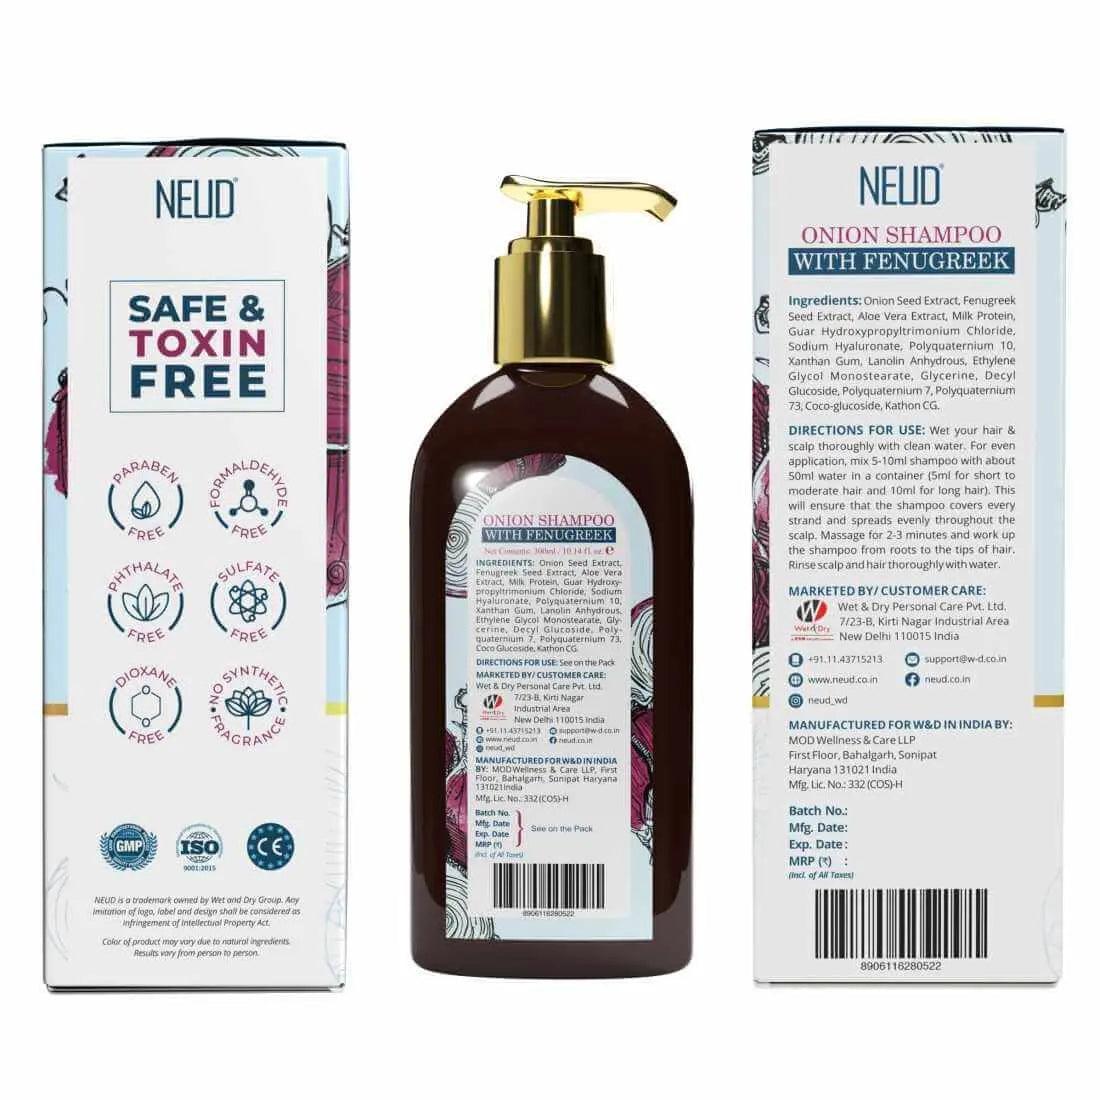 NEUD Premium Onion Hair Shampoo with Fenugreek for Men & Women - 300 ml